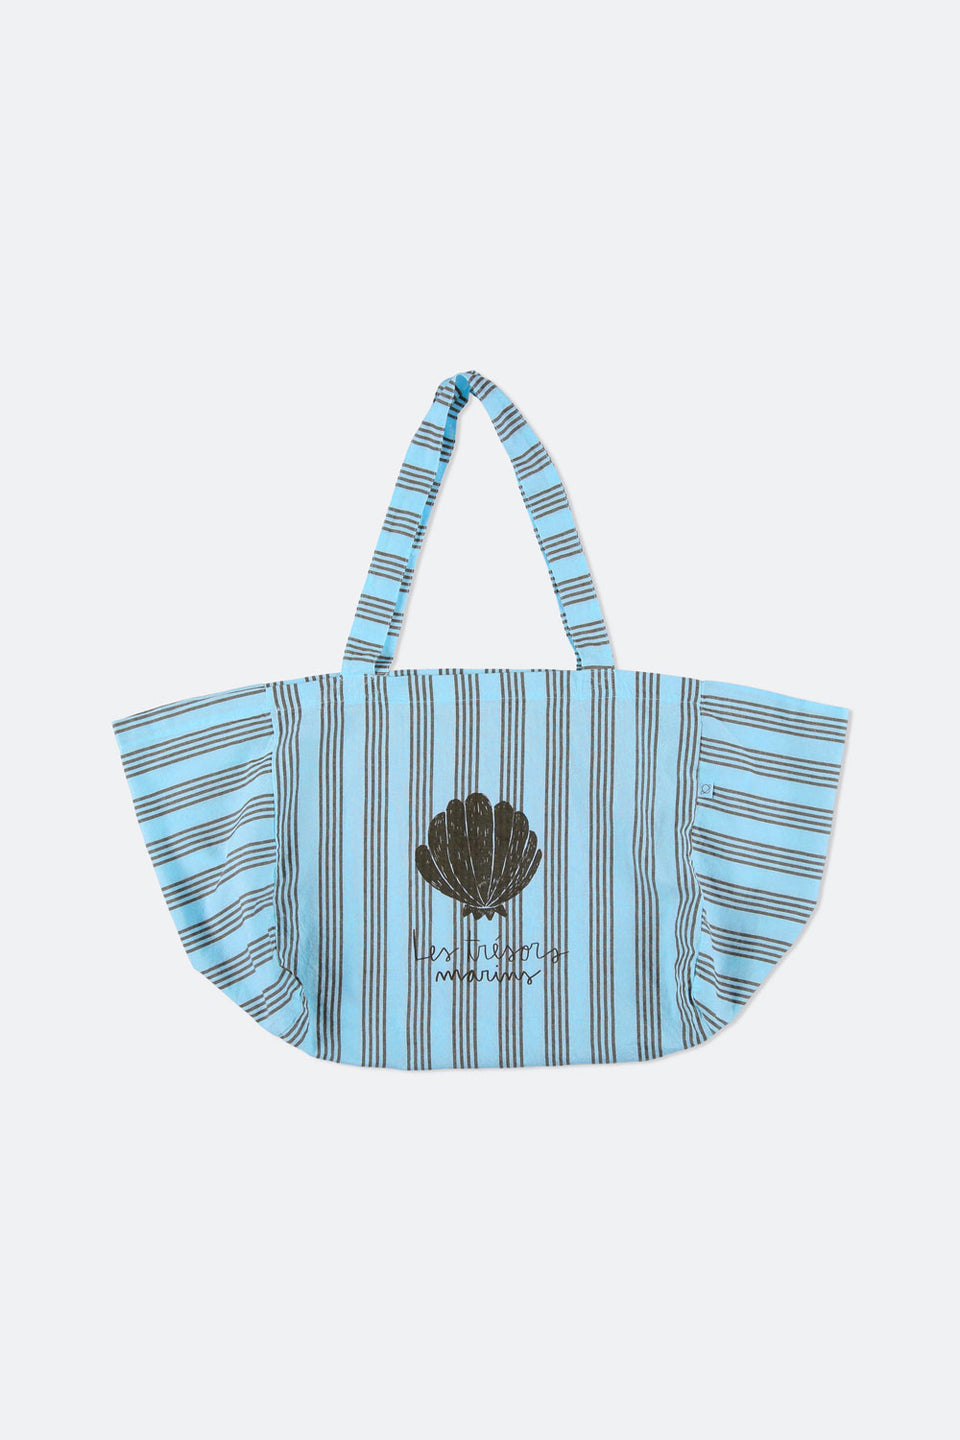 Blue Vintage Stripes Tote Bag (model shown with Ivory)